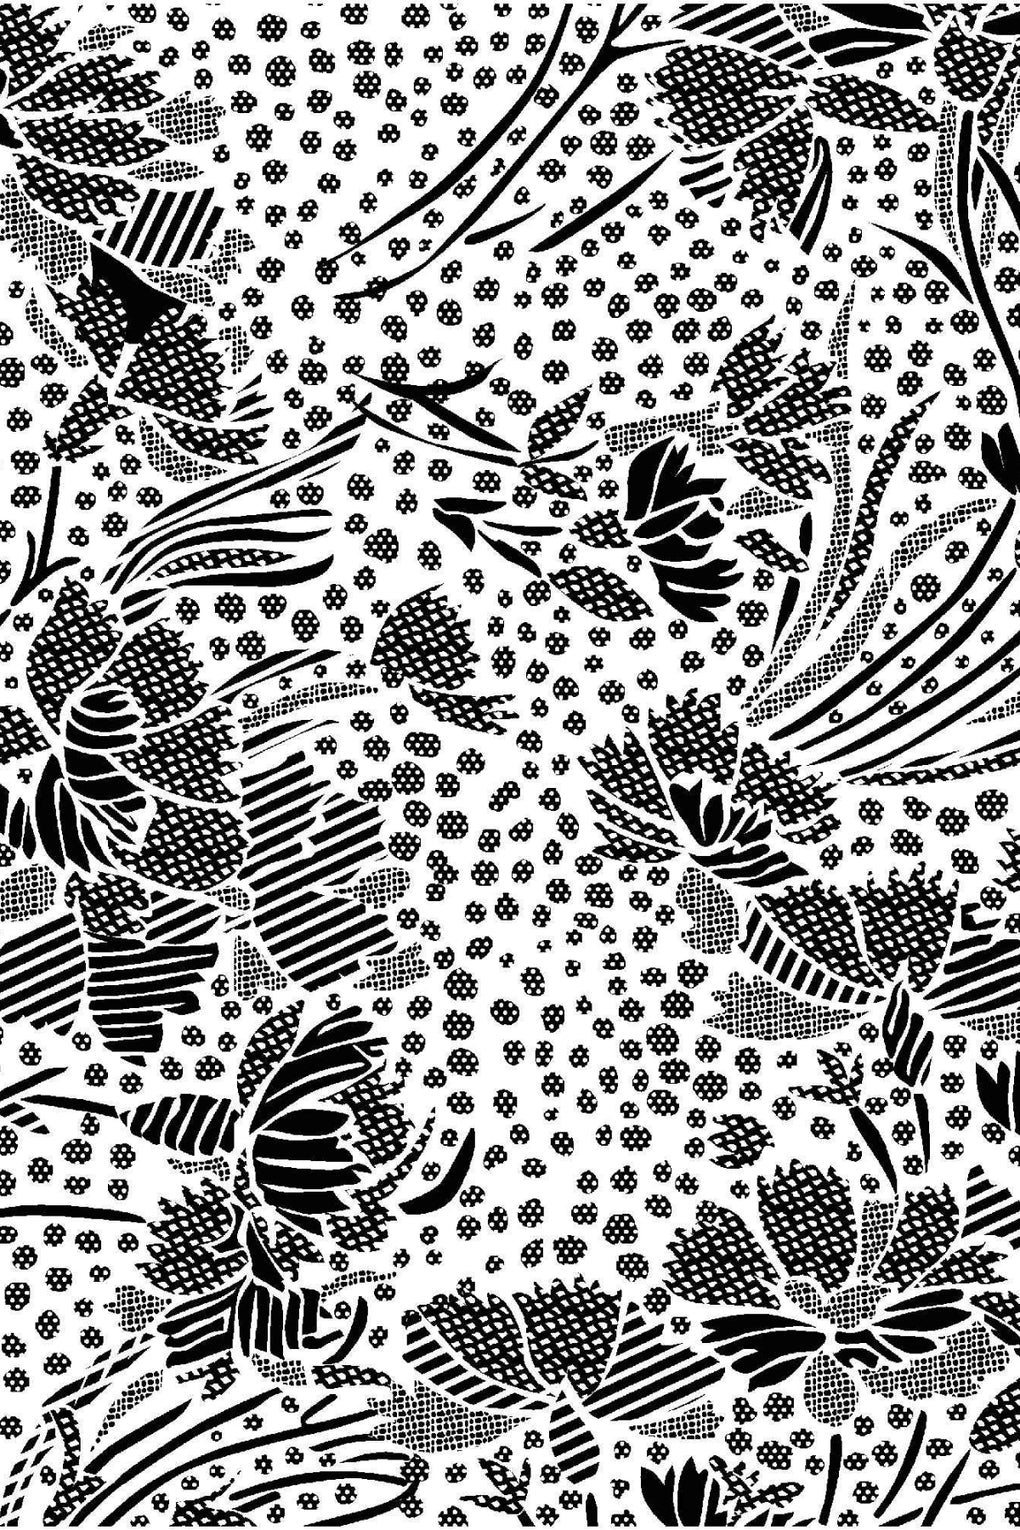 Flowers With Irregular Dots (SE-1962_Black)